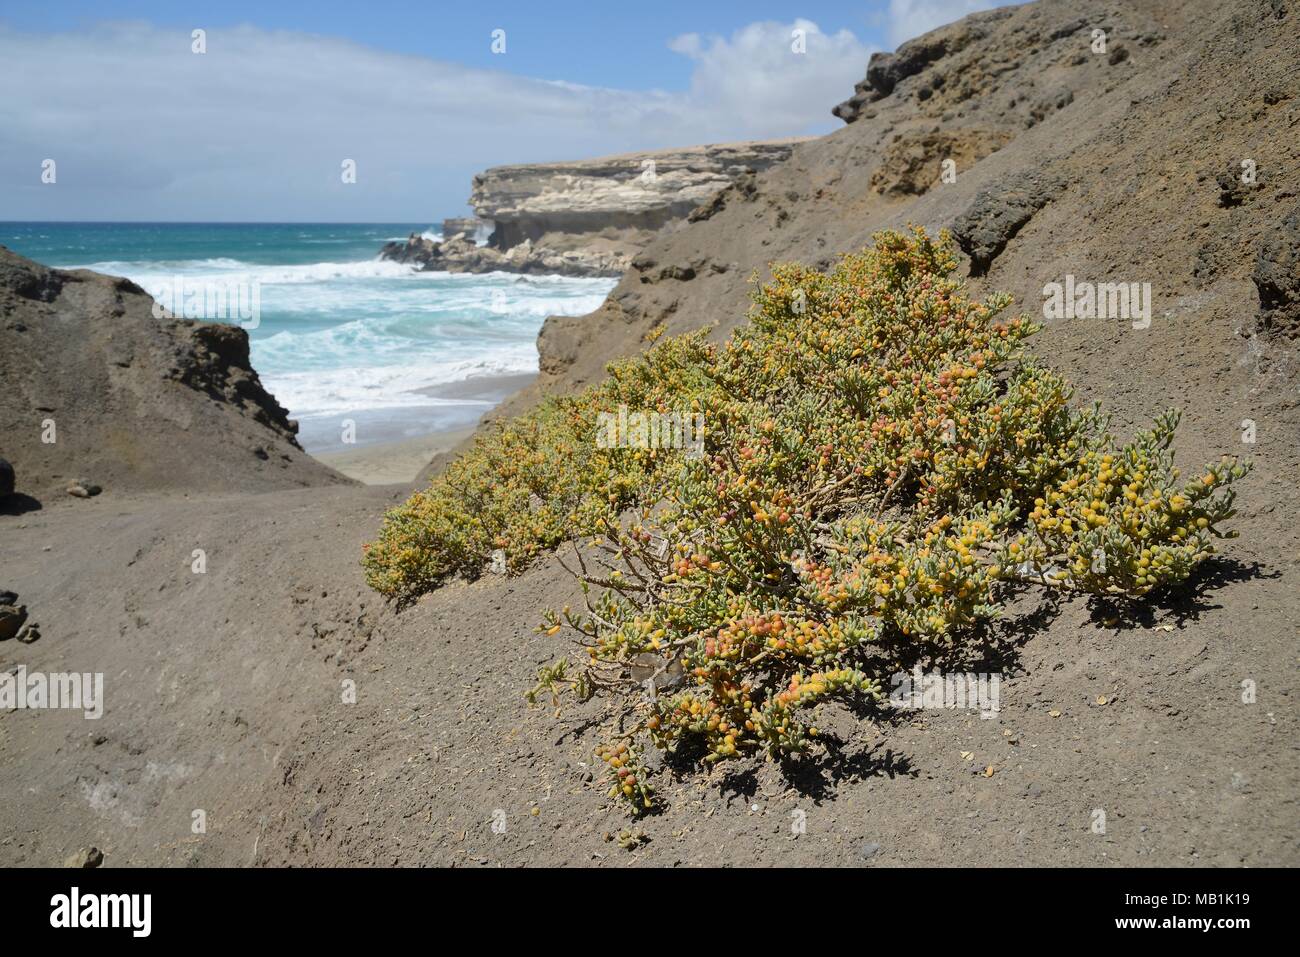 Sea grape / Uvas de mar (Zygophyllum / Tetraena fontanesii) bush growing in gulley in volcanic rock cliffs leading down to a beach, Fuerteventura. Stock Photo